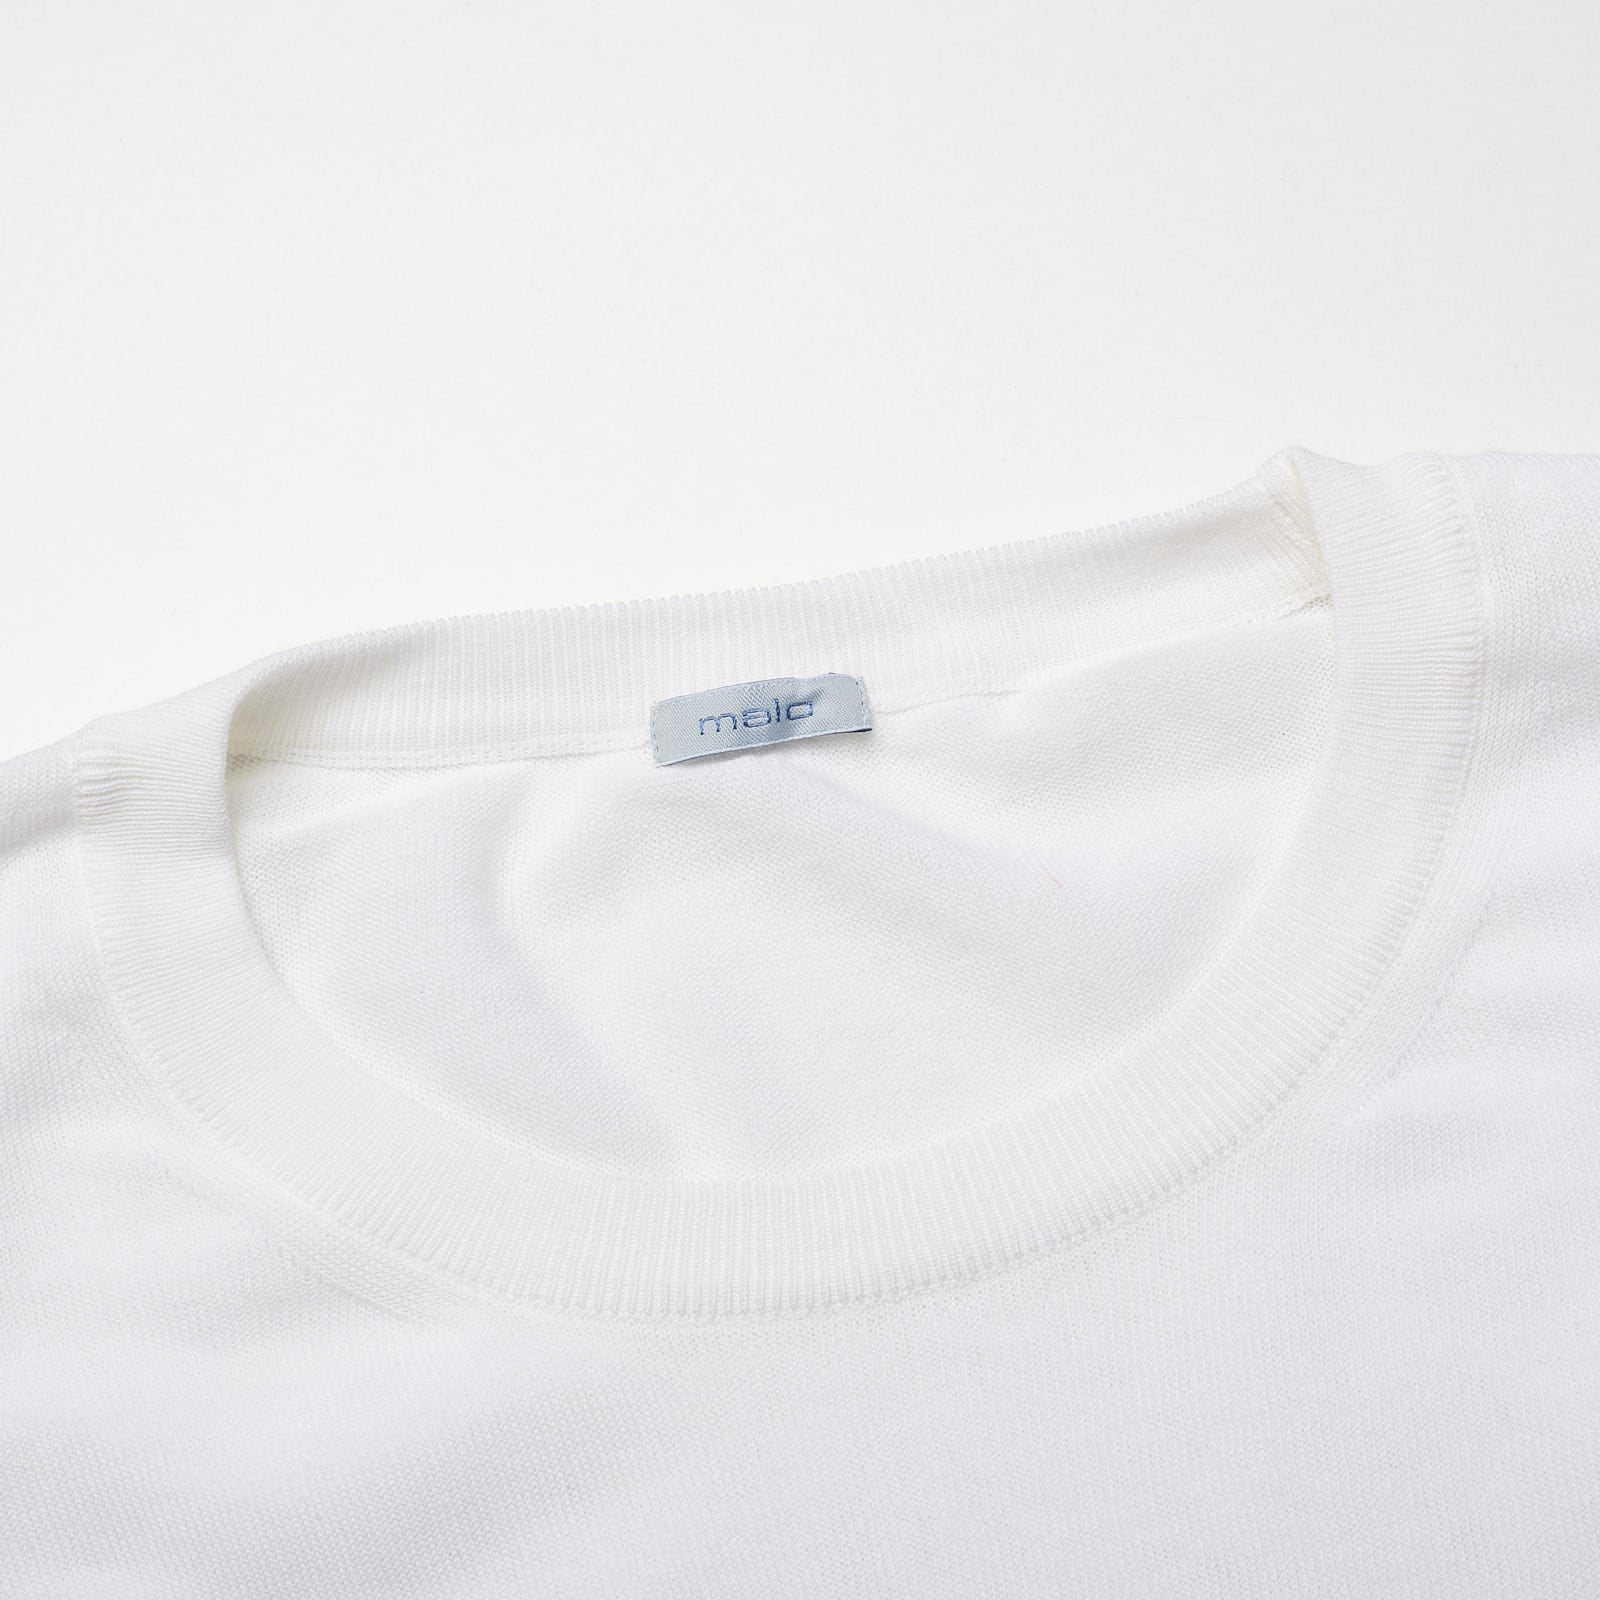 MALO White Cotton Knit Long Sleeve Crewneck T-Shirt EU 54 NEW US L MALO